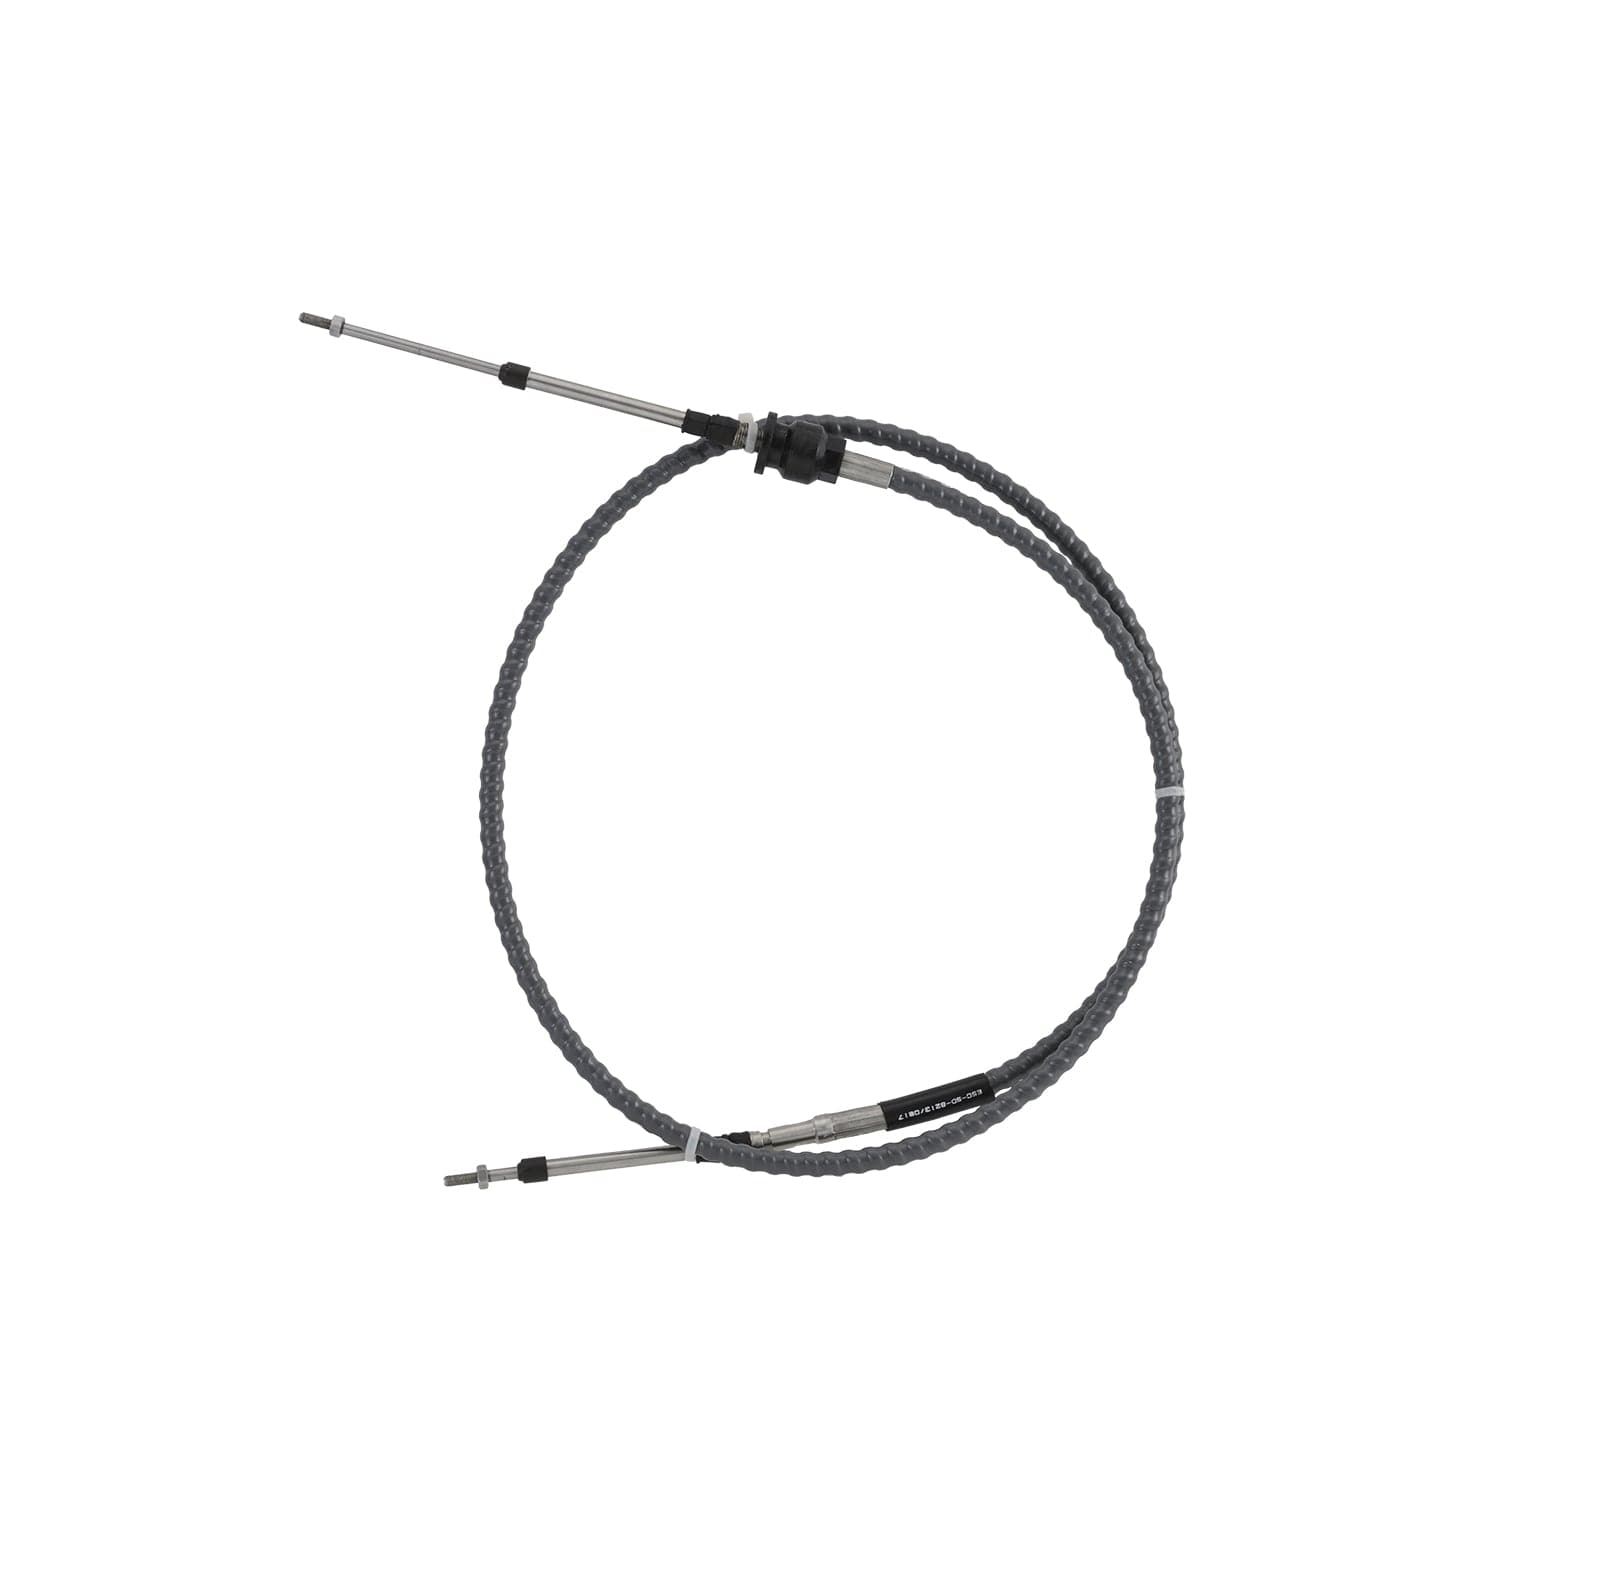 SBT Steering Cable for Sea-Doo GTX LTD/GTX/GTX LE/GTX 4 Tec STD/GTI/GTI LE RFI